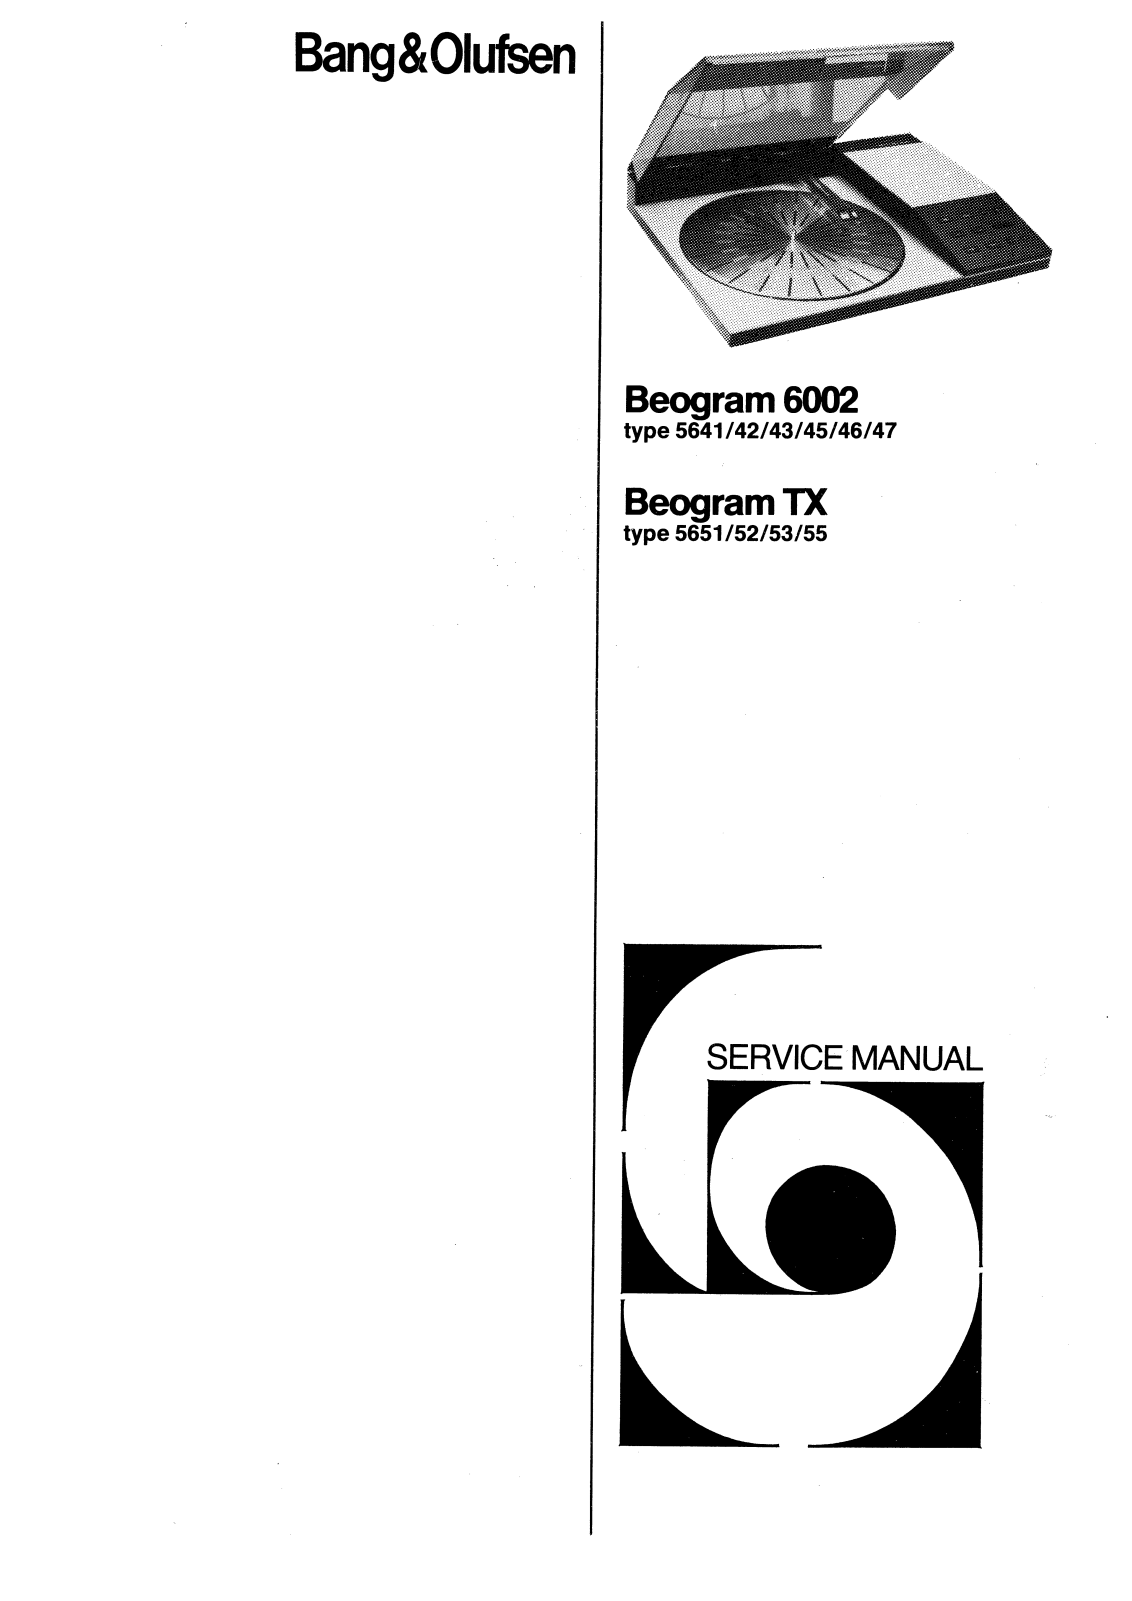 Bang Olufsen Beogram TX, Beogram 6002 Service Manual